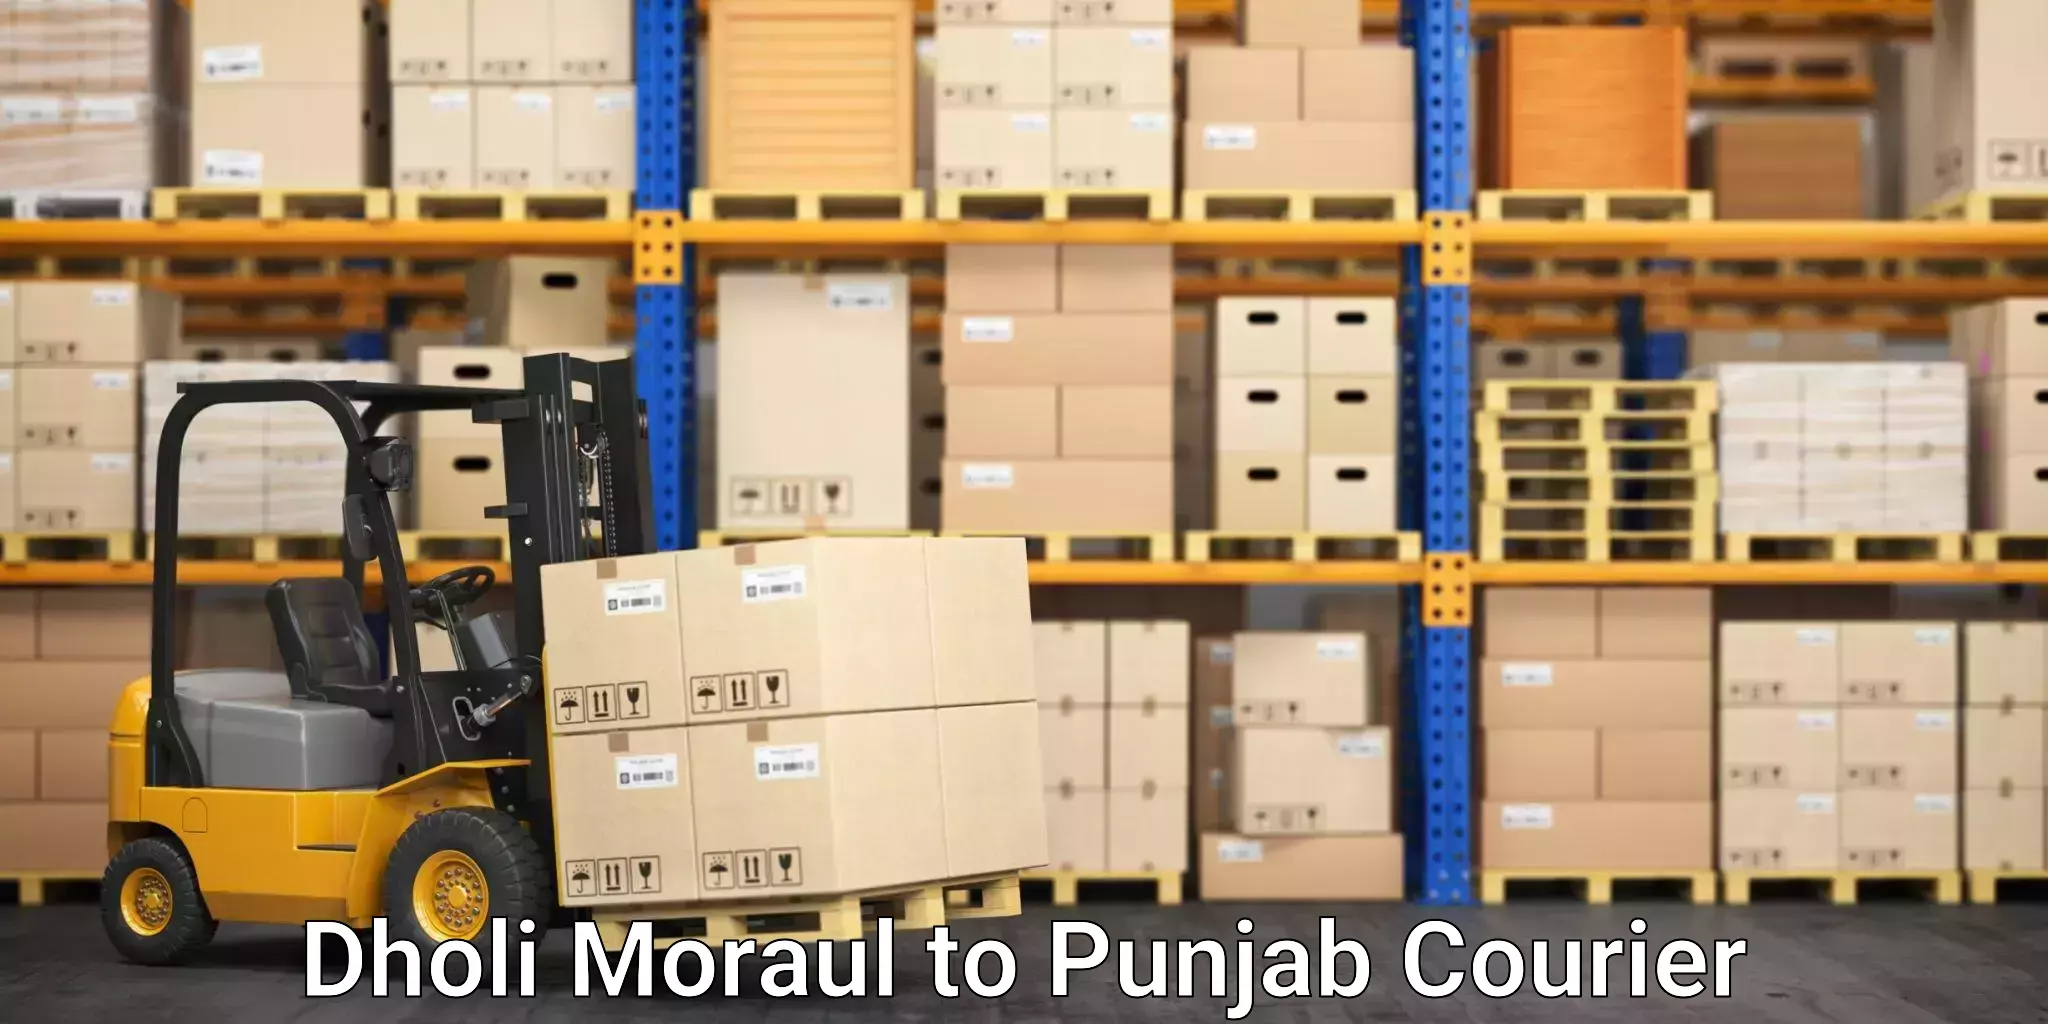 Furniture transport specialists Dholi Moraul to Zirakpur